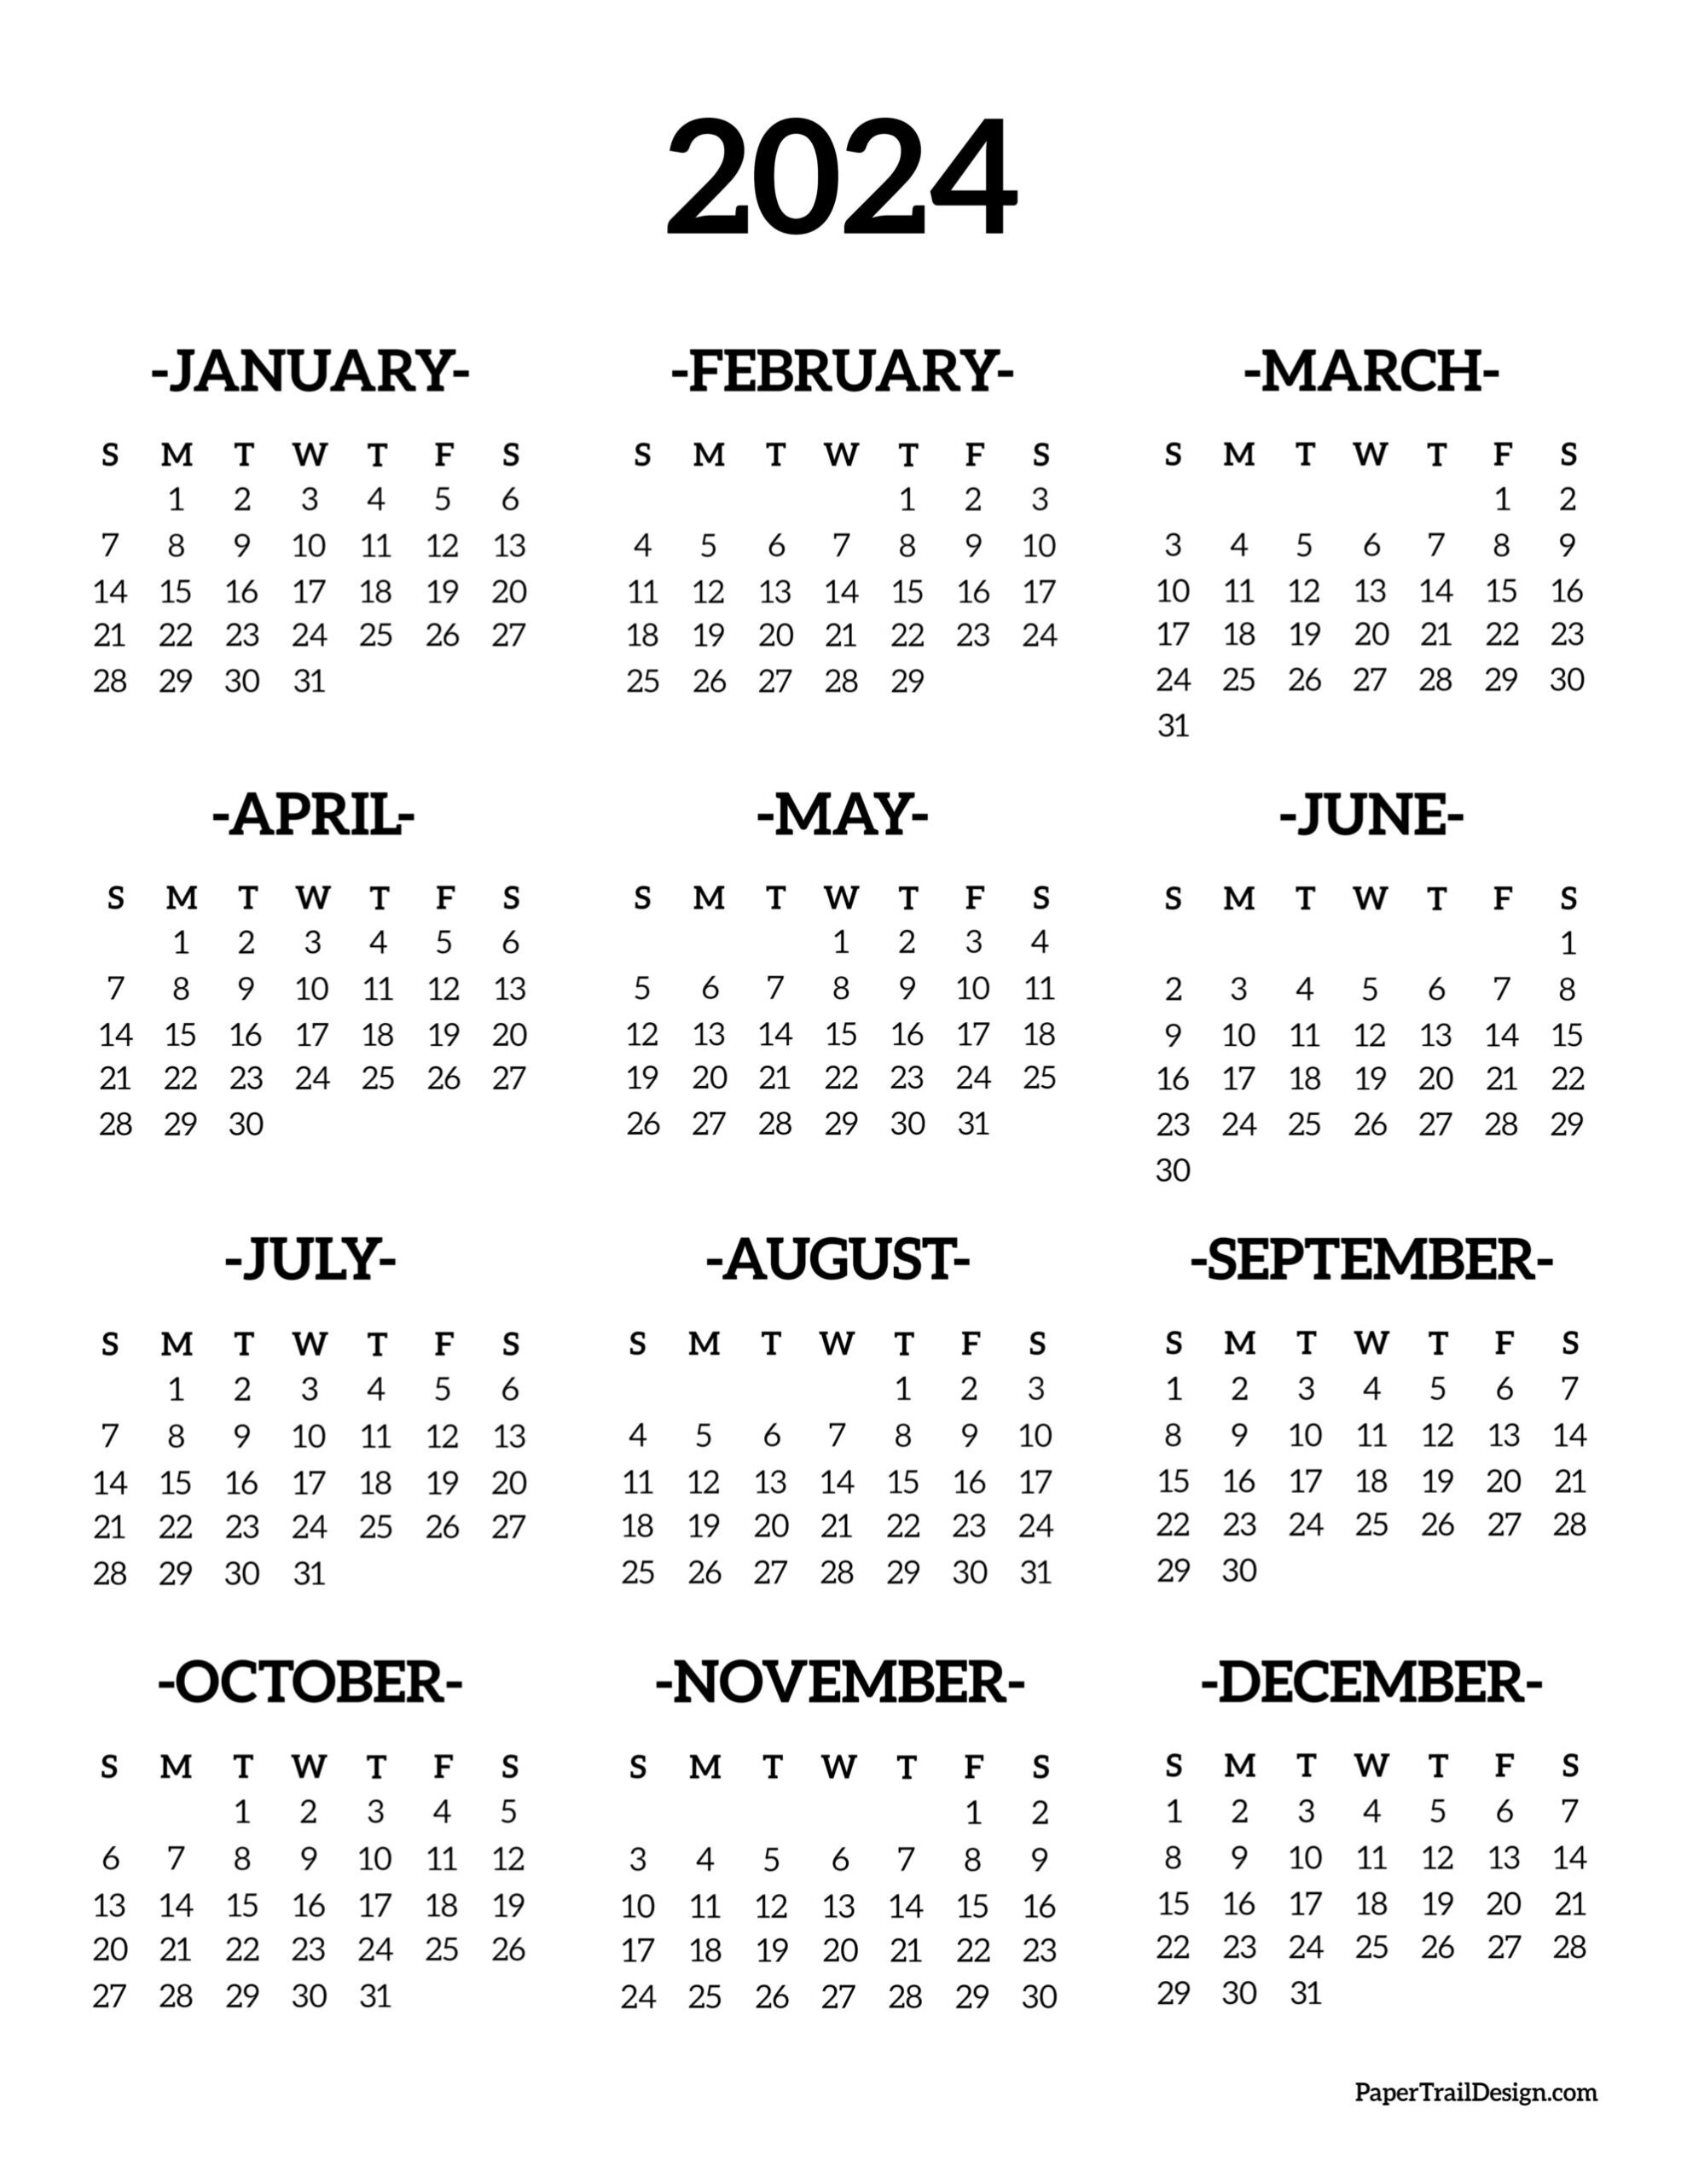 Calendar 2024 Printable One Page - Paper Trail Design | Printable Full Year 2024 Calendar Free